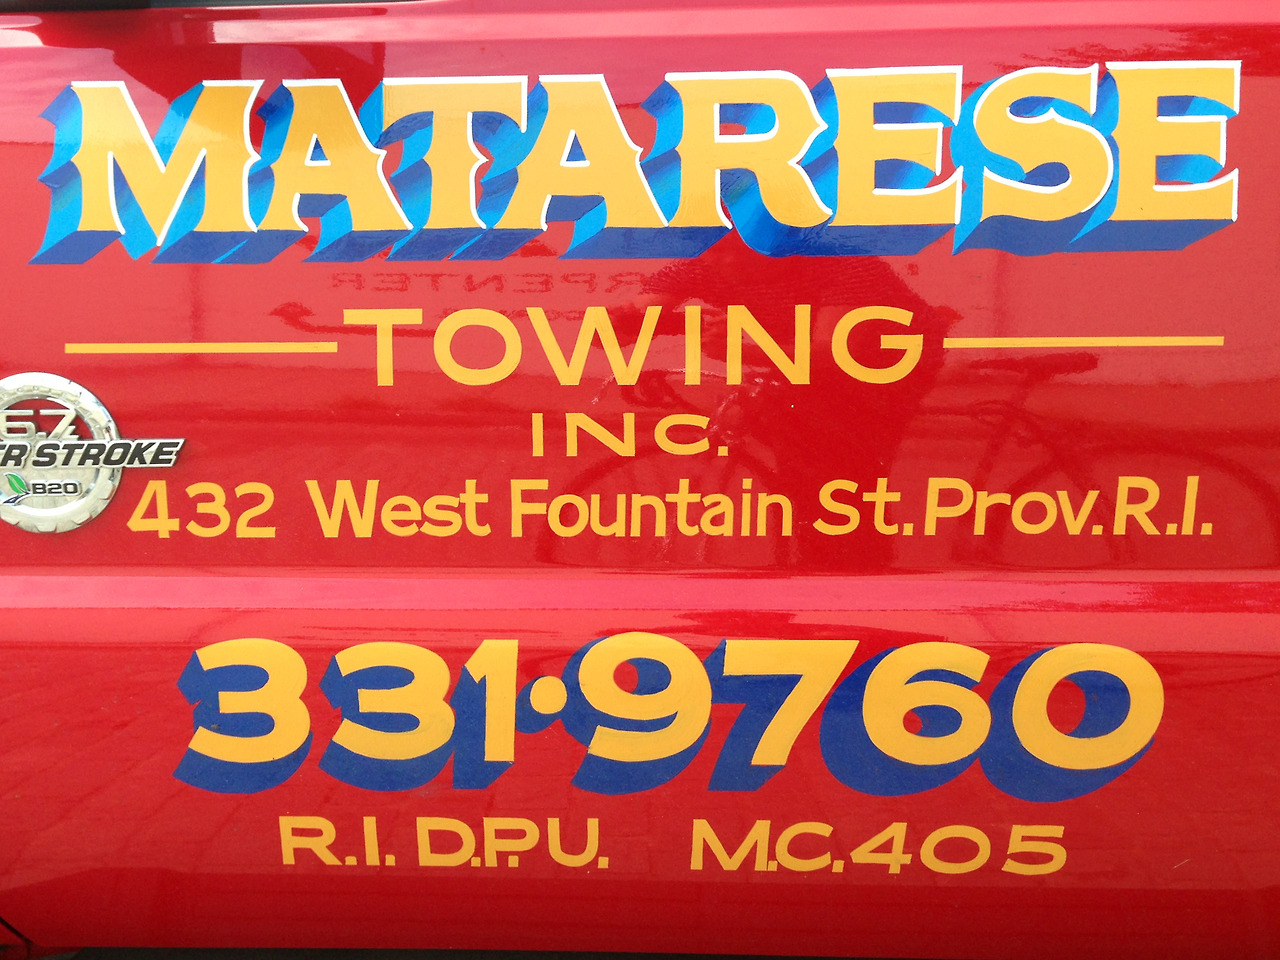 “MATARESE TOWING INC. 432 West Fountain St. Prov. R.I. 331•9760 R.I. D.P.U. M.C.405″